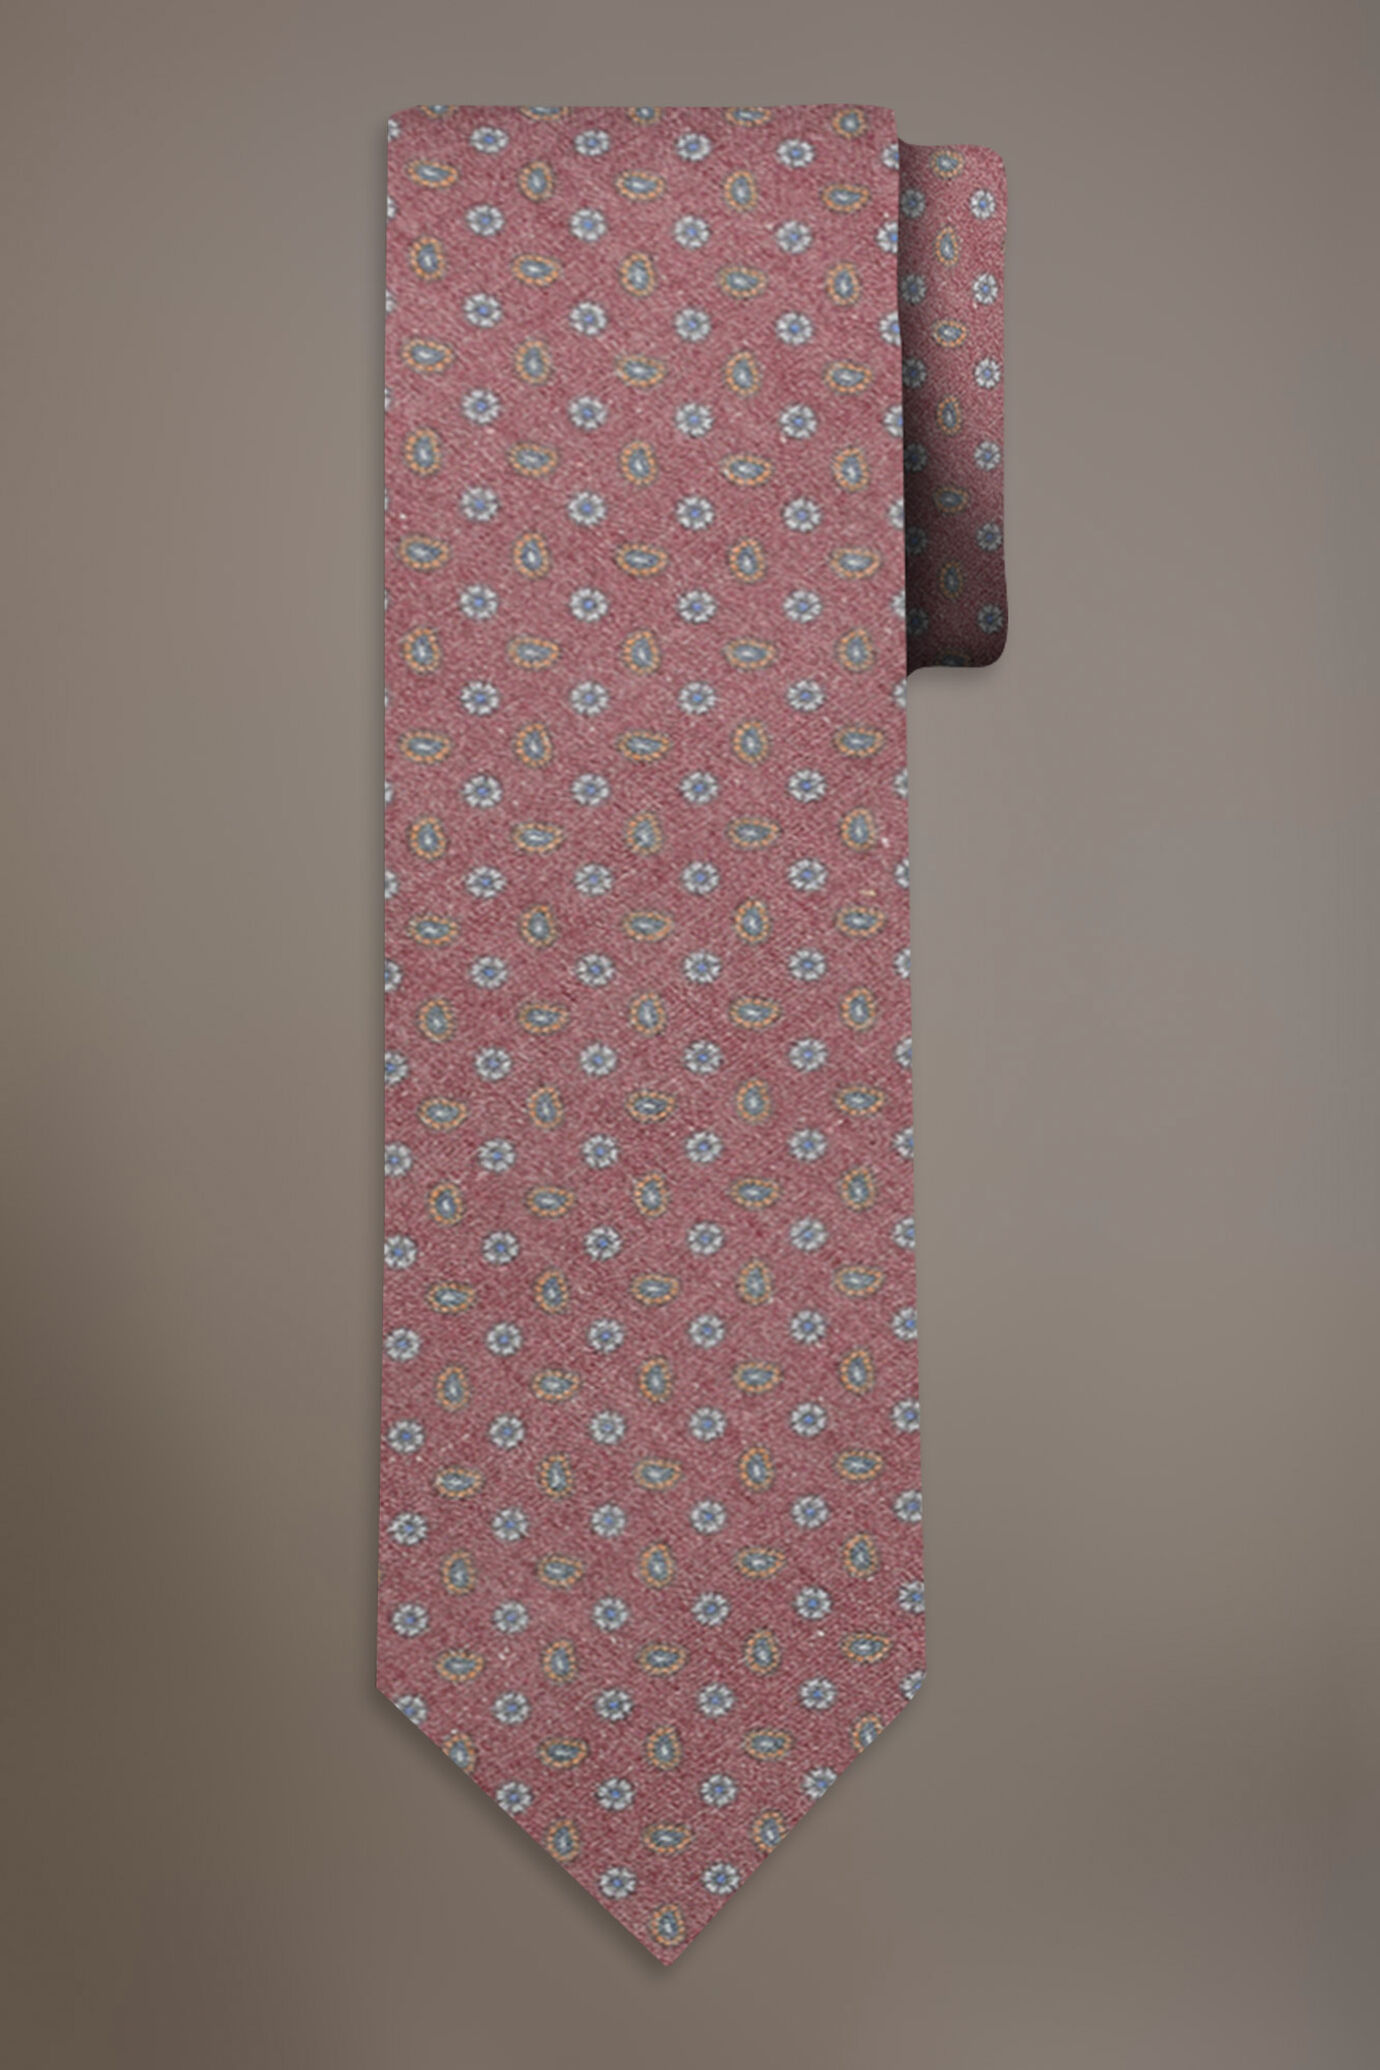 Cravatta uomo in vari colori misto lino fantasia